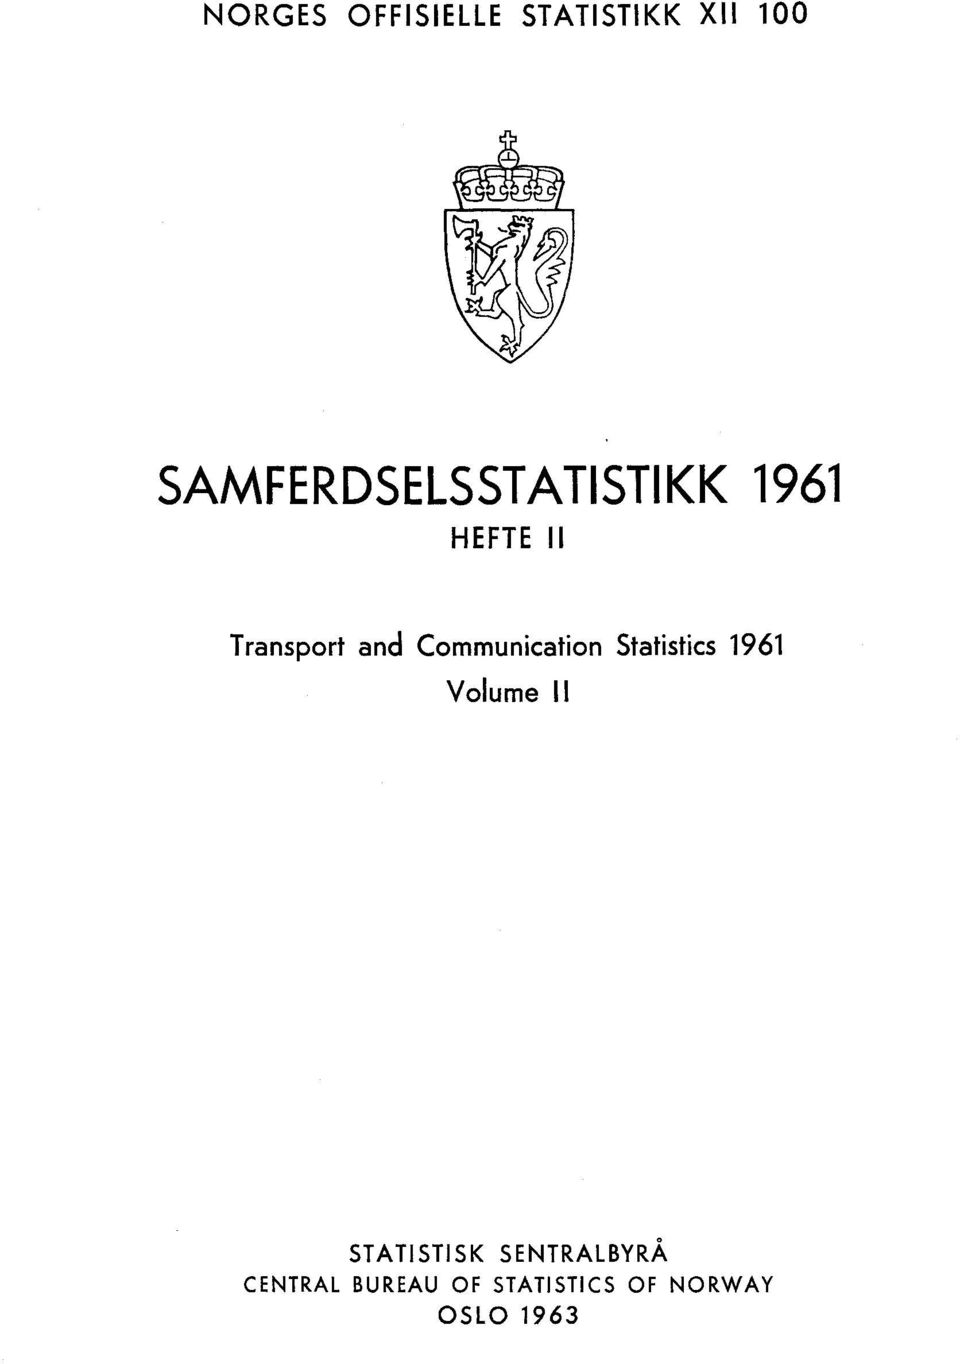 Communication Statistics 1961 Volume II 0